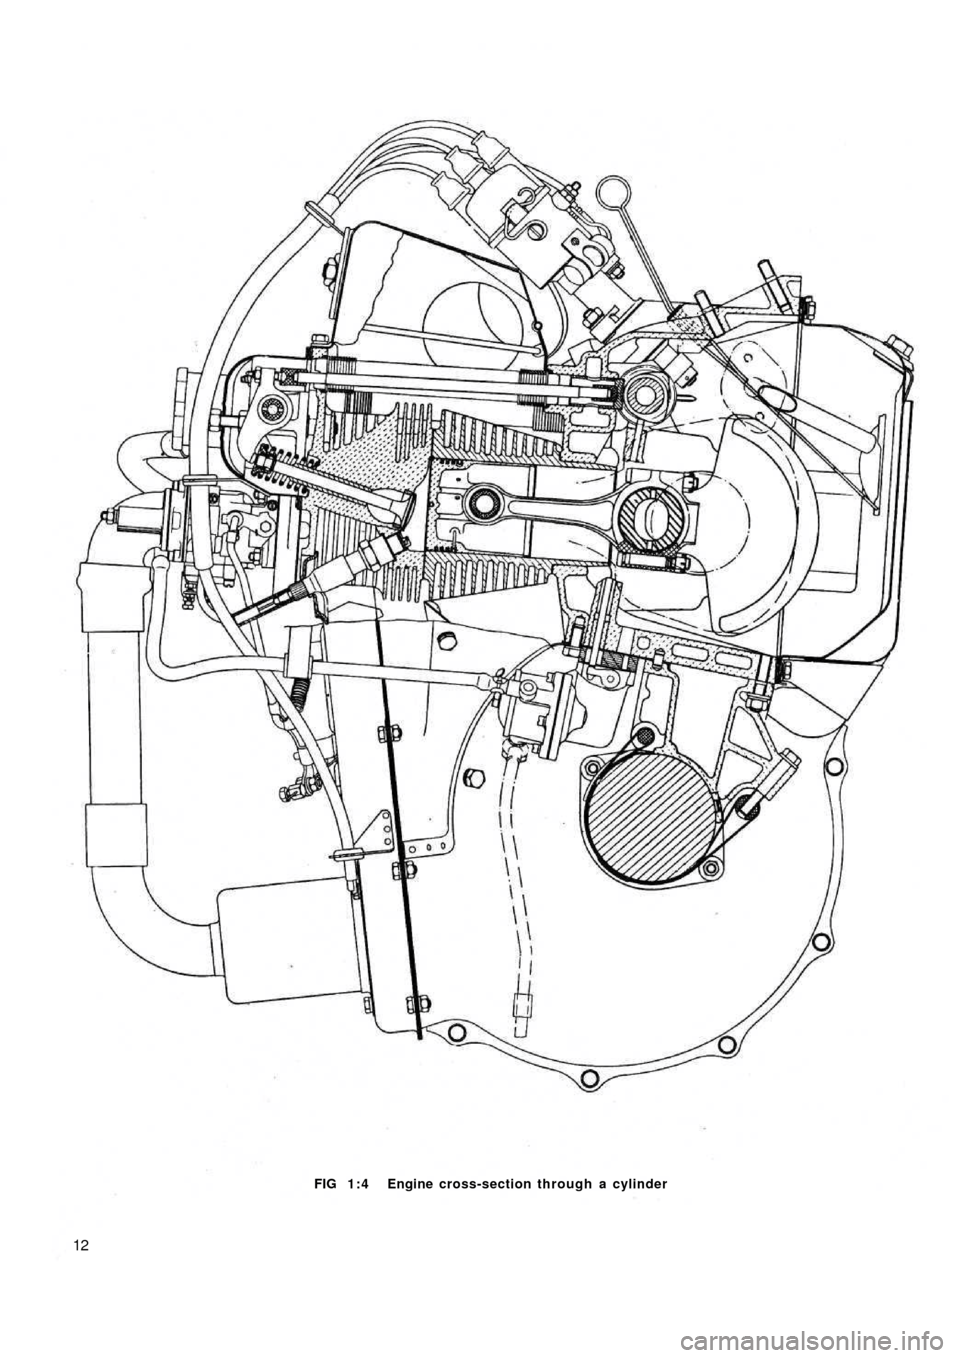 FIAT 500 1968 1.G Workshop Manual FIG 1 : 4  Engine cross-section through a cylinder
12 